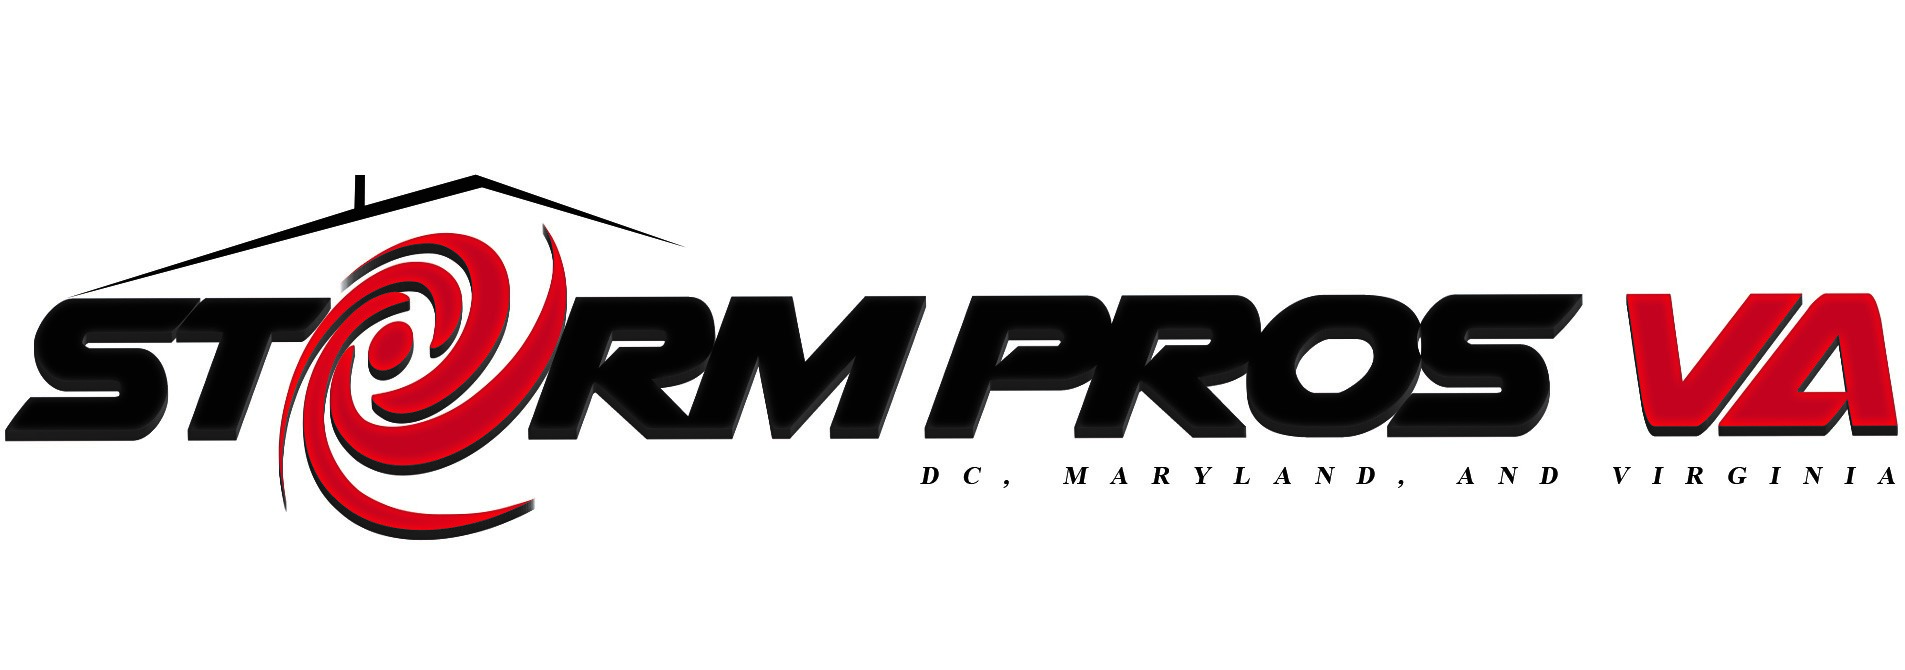 Storm Pros Corporation Logo